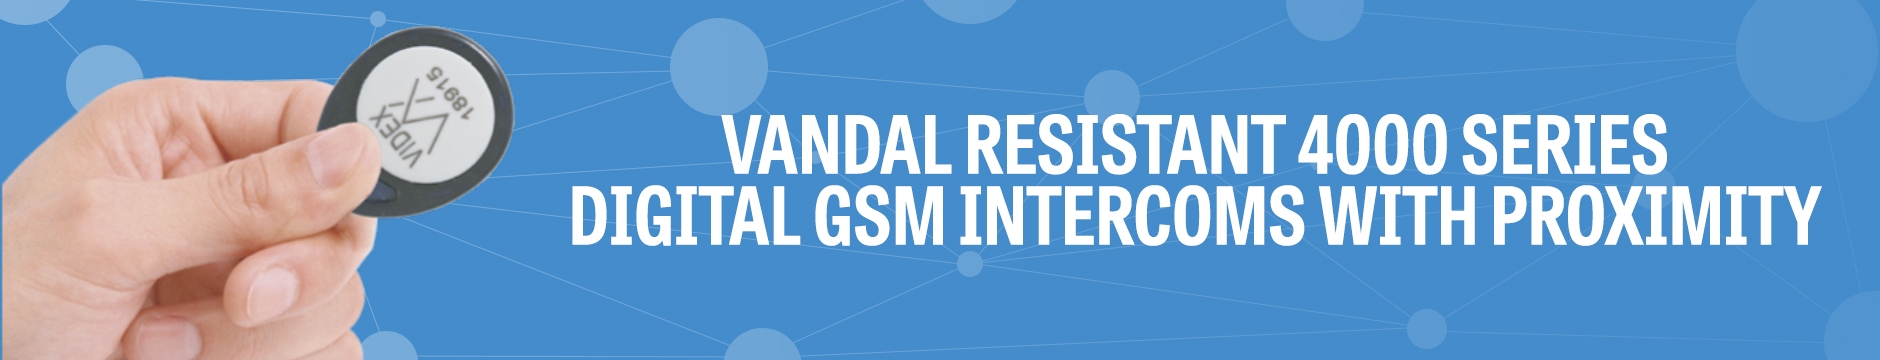 Vandal Resistant 4000 series digital GSM Intercoms with proximity